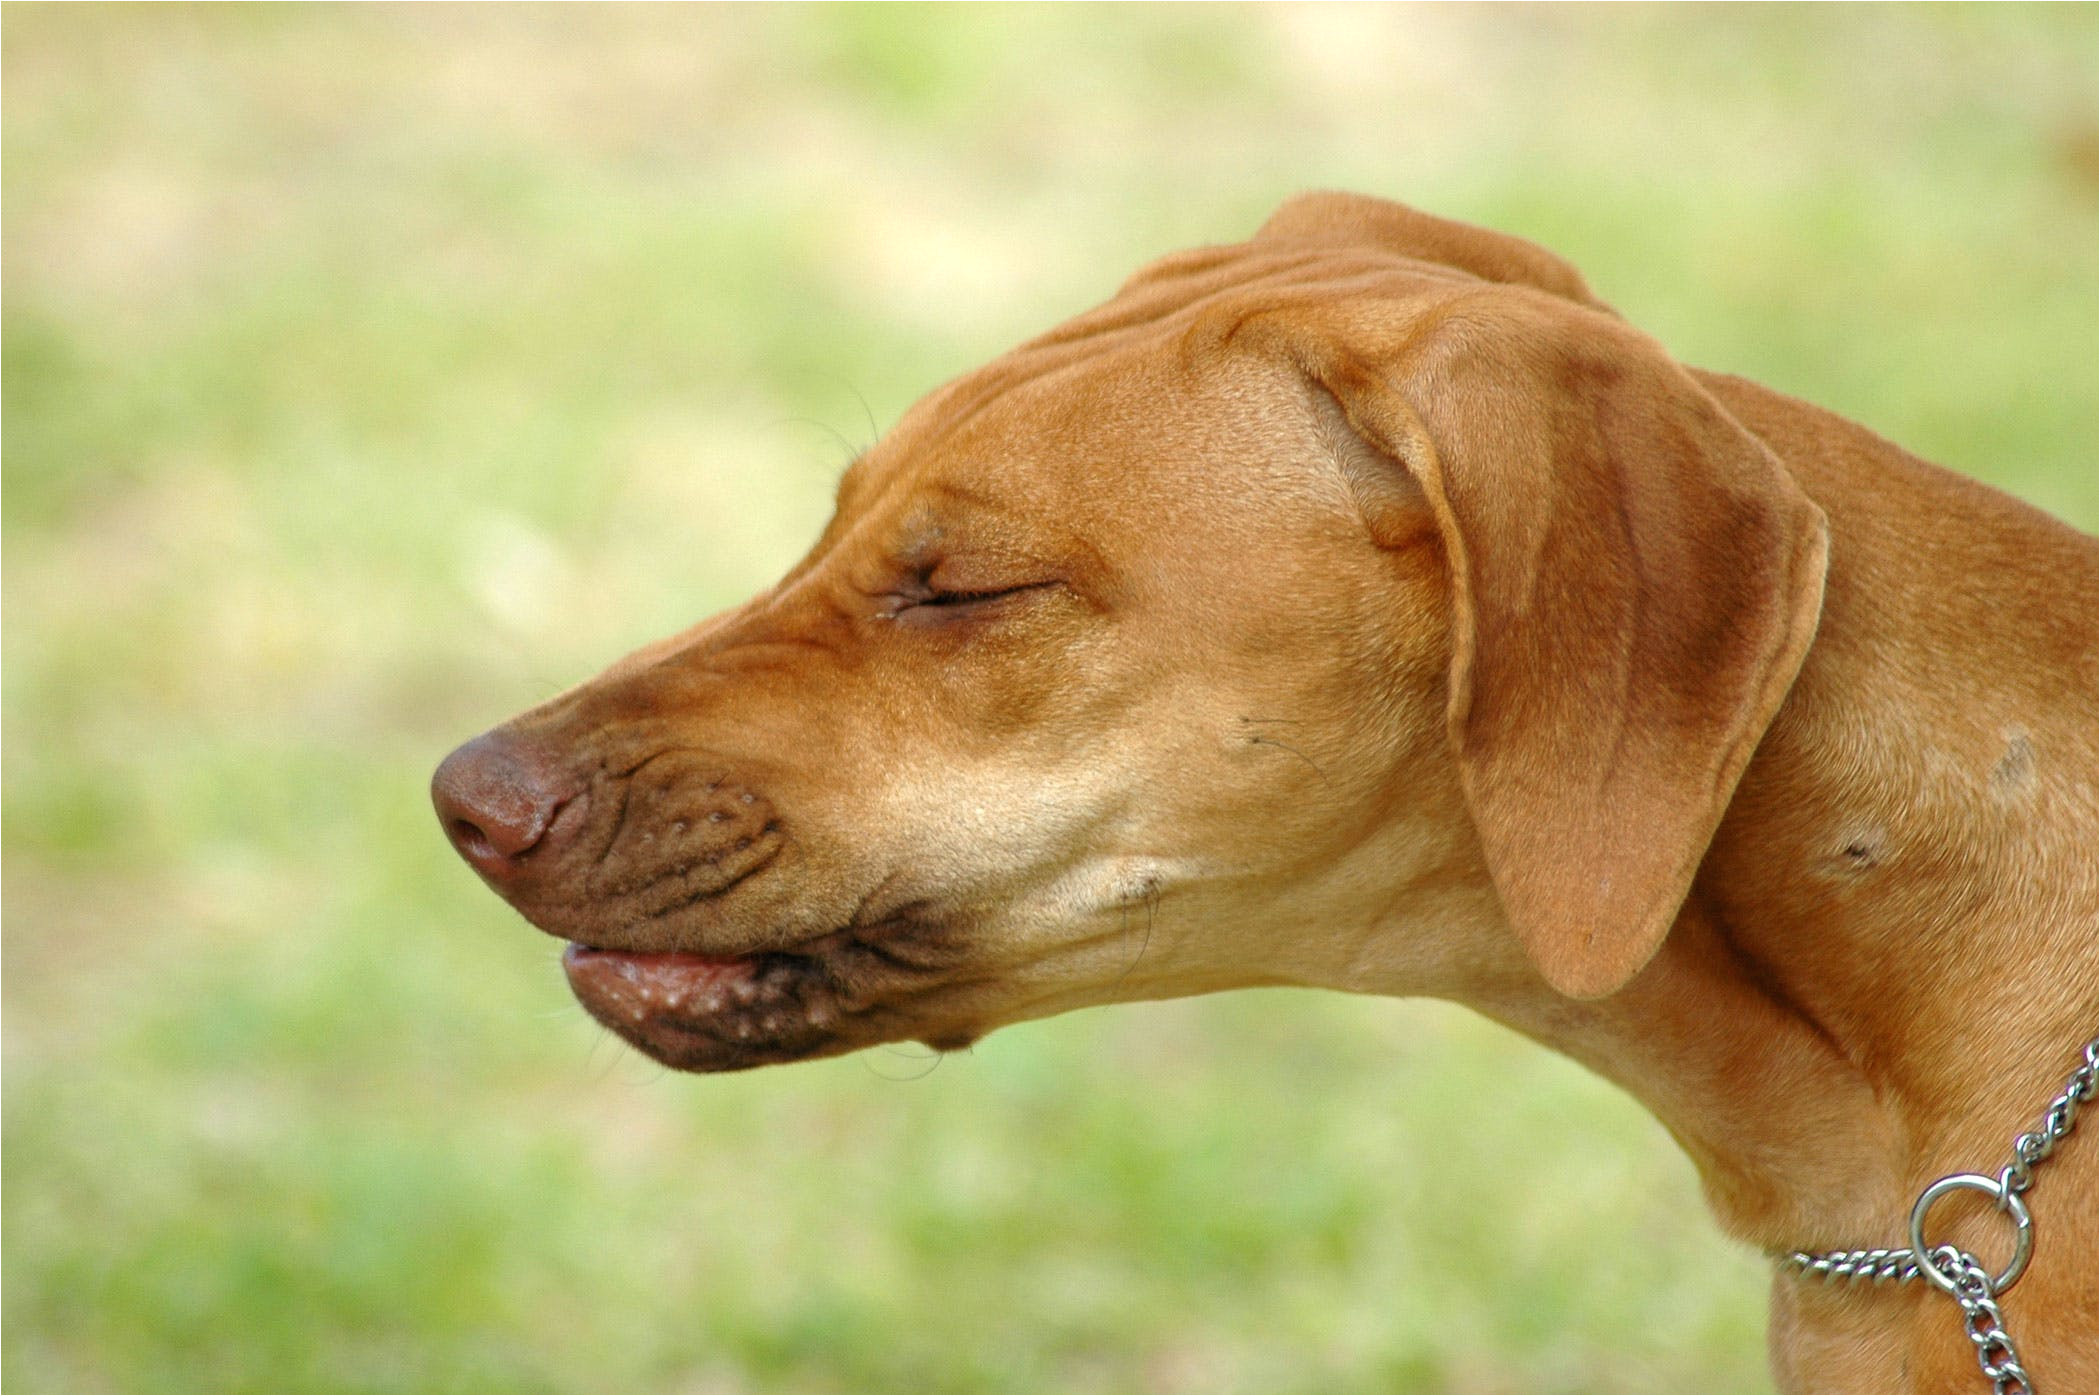 pimobendan poisoning in dogs